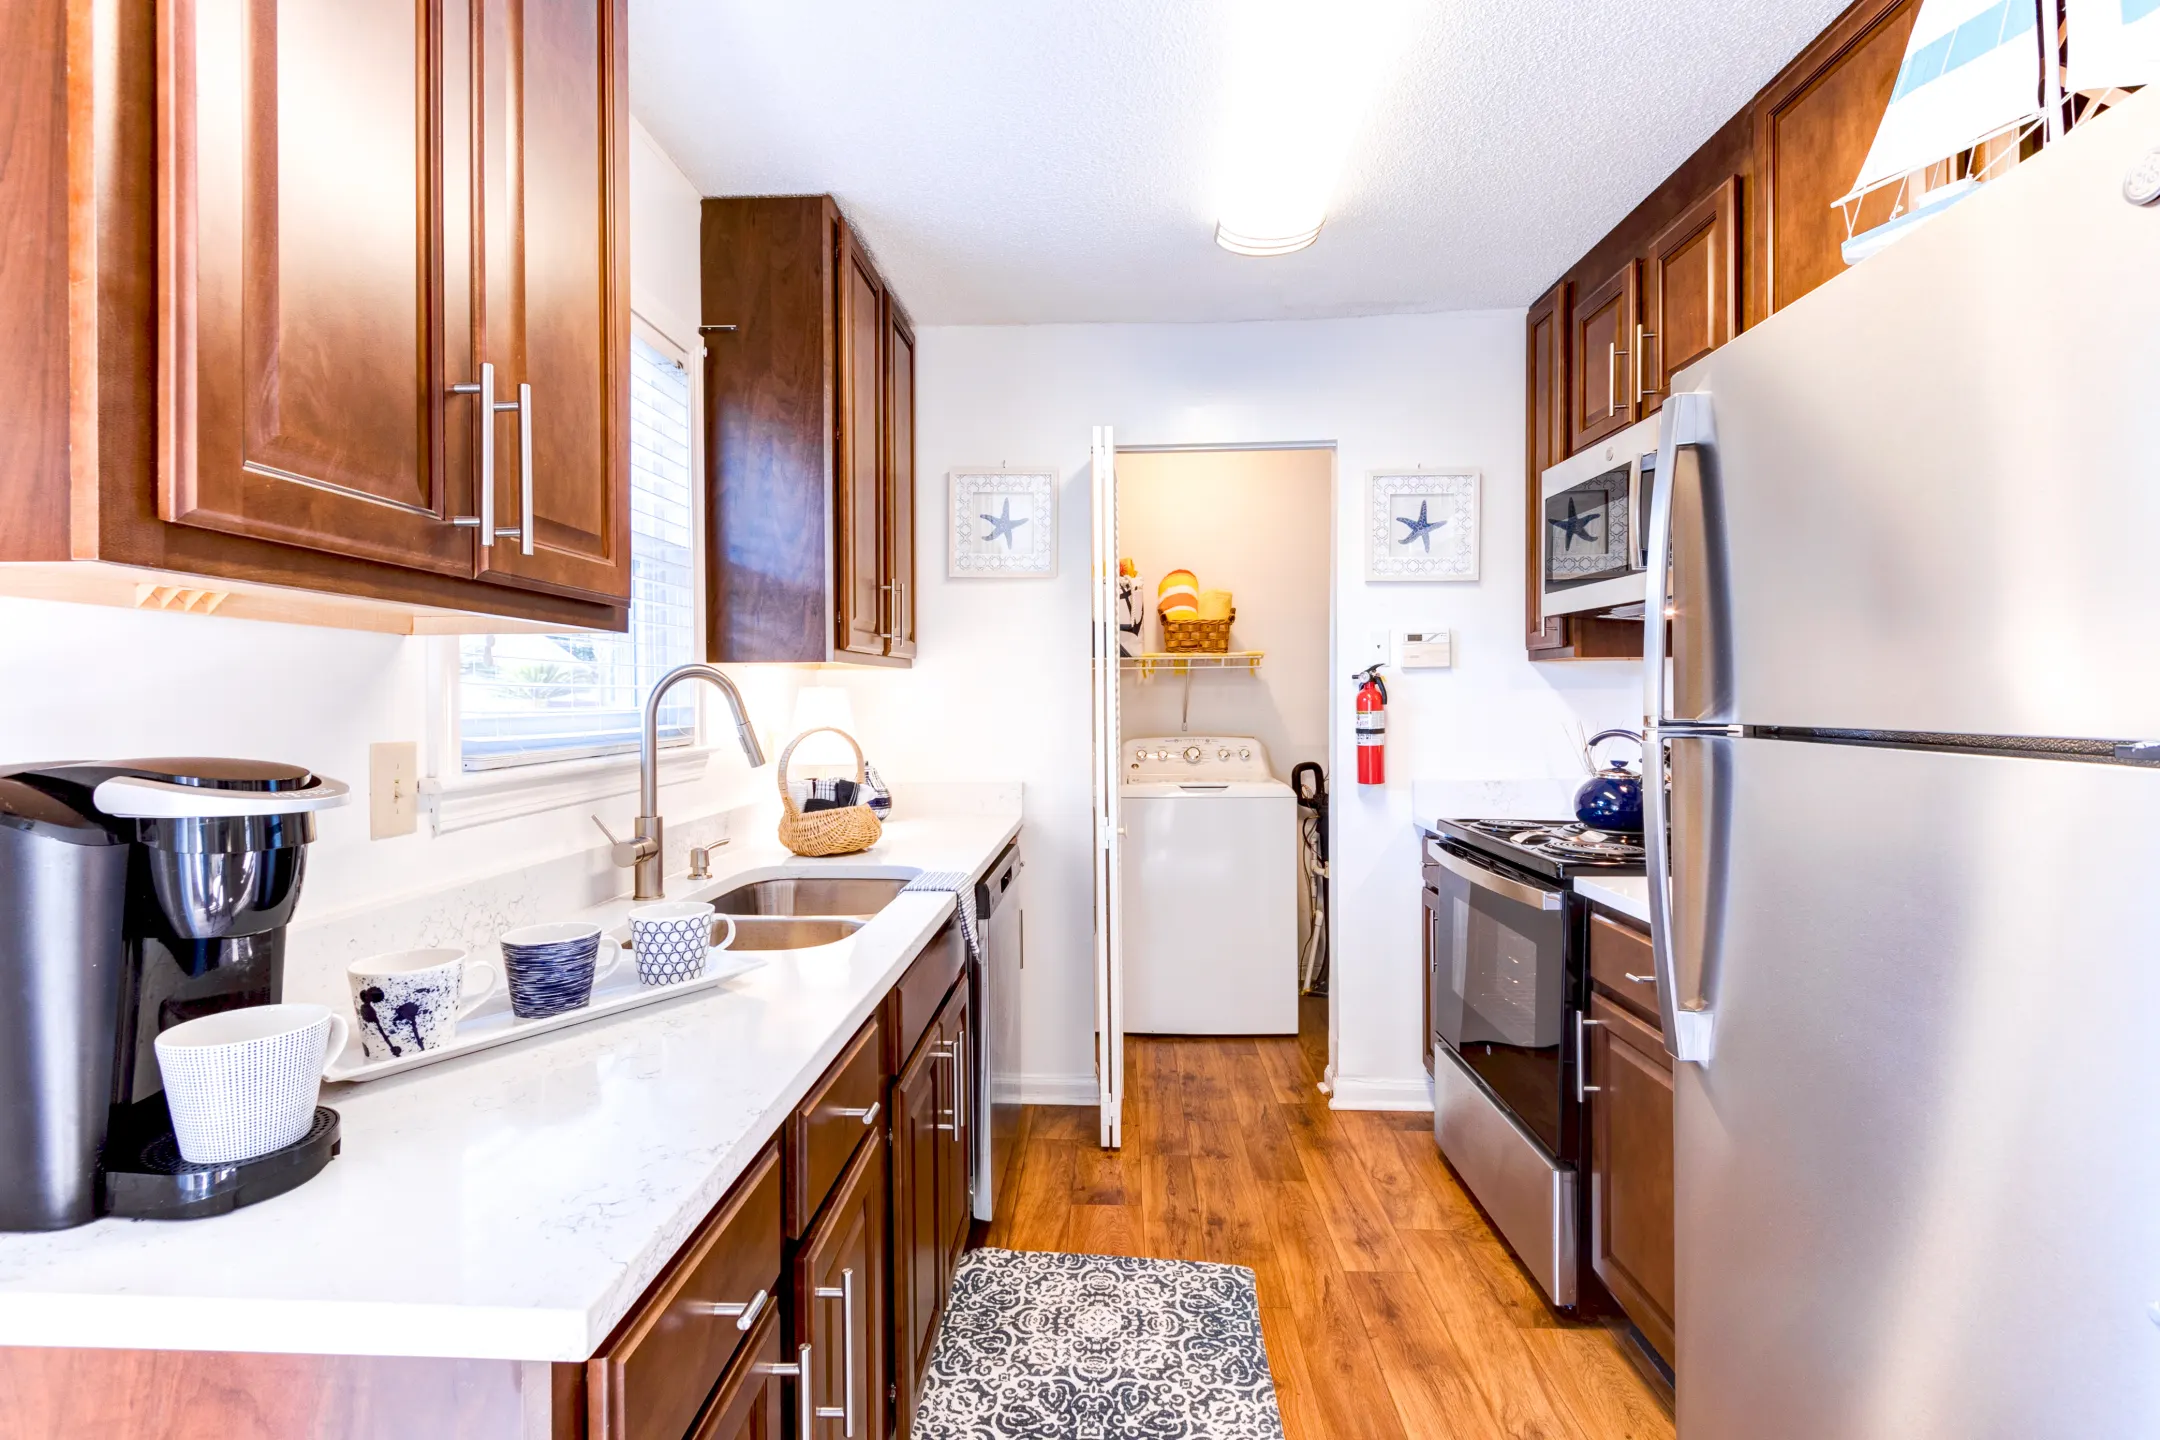 Kitchen - Anchorage Apartments - Mount Pleasant, SC